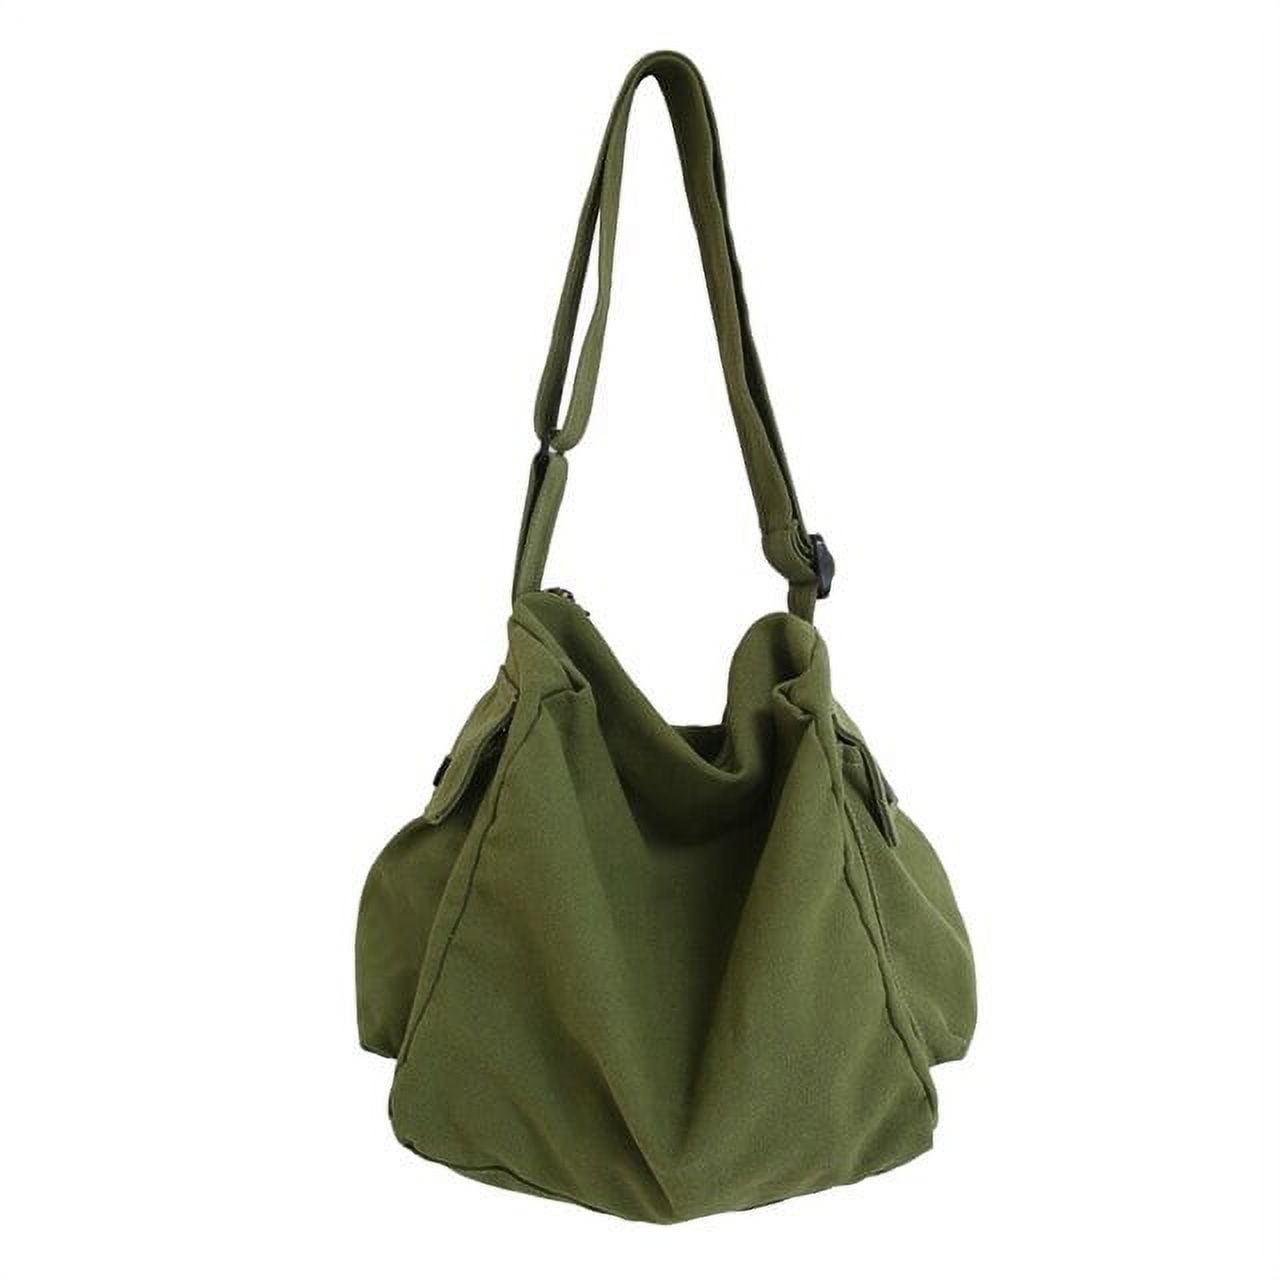 CoCopeaunts trendy handbags Korean version of sweet and fashionable wild  messenger bag shoulder bag handbag locomotive bag